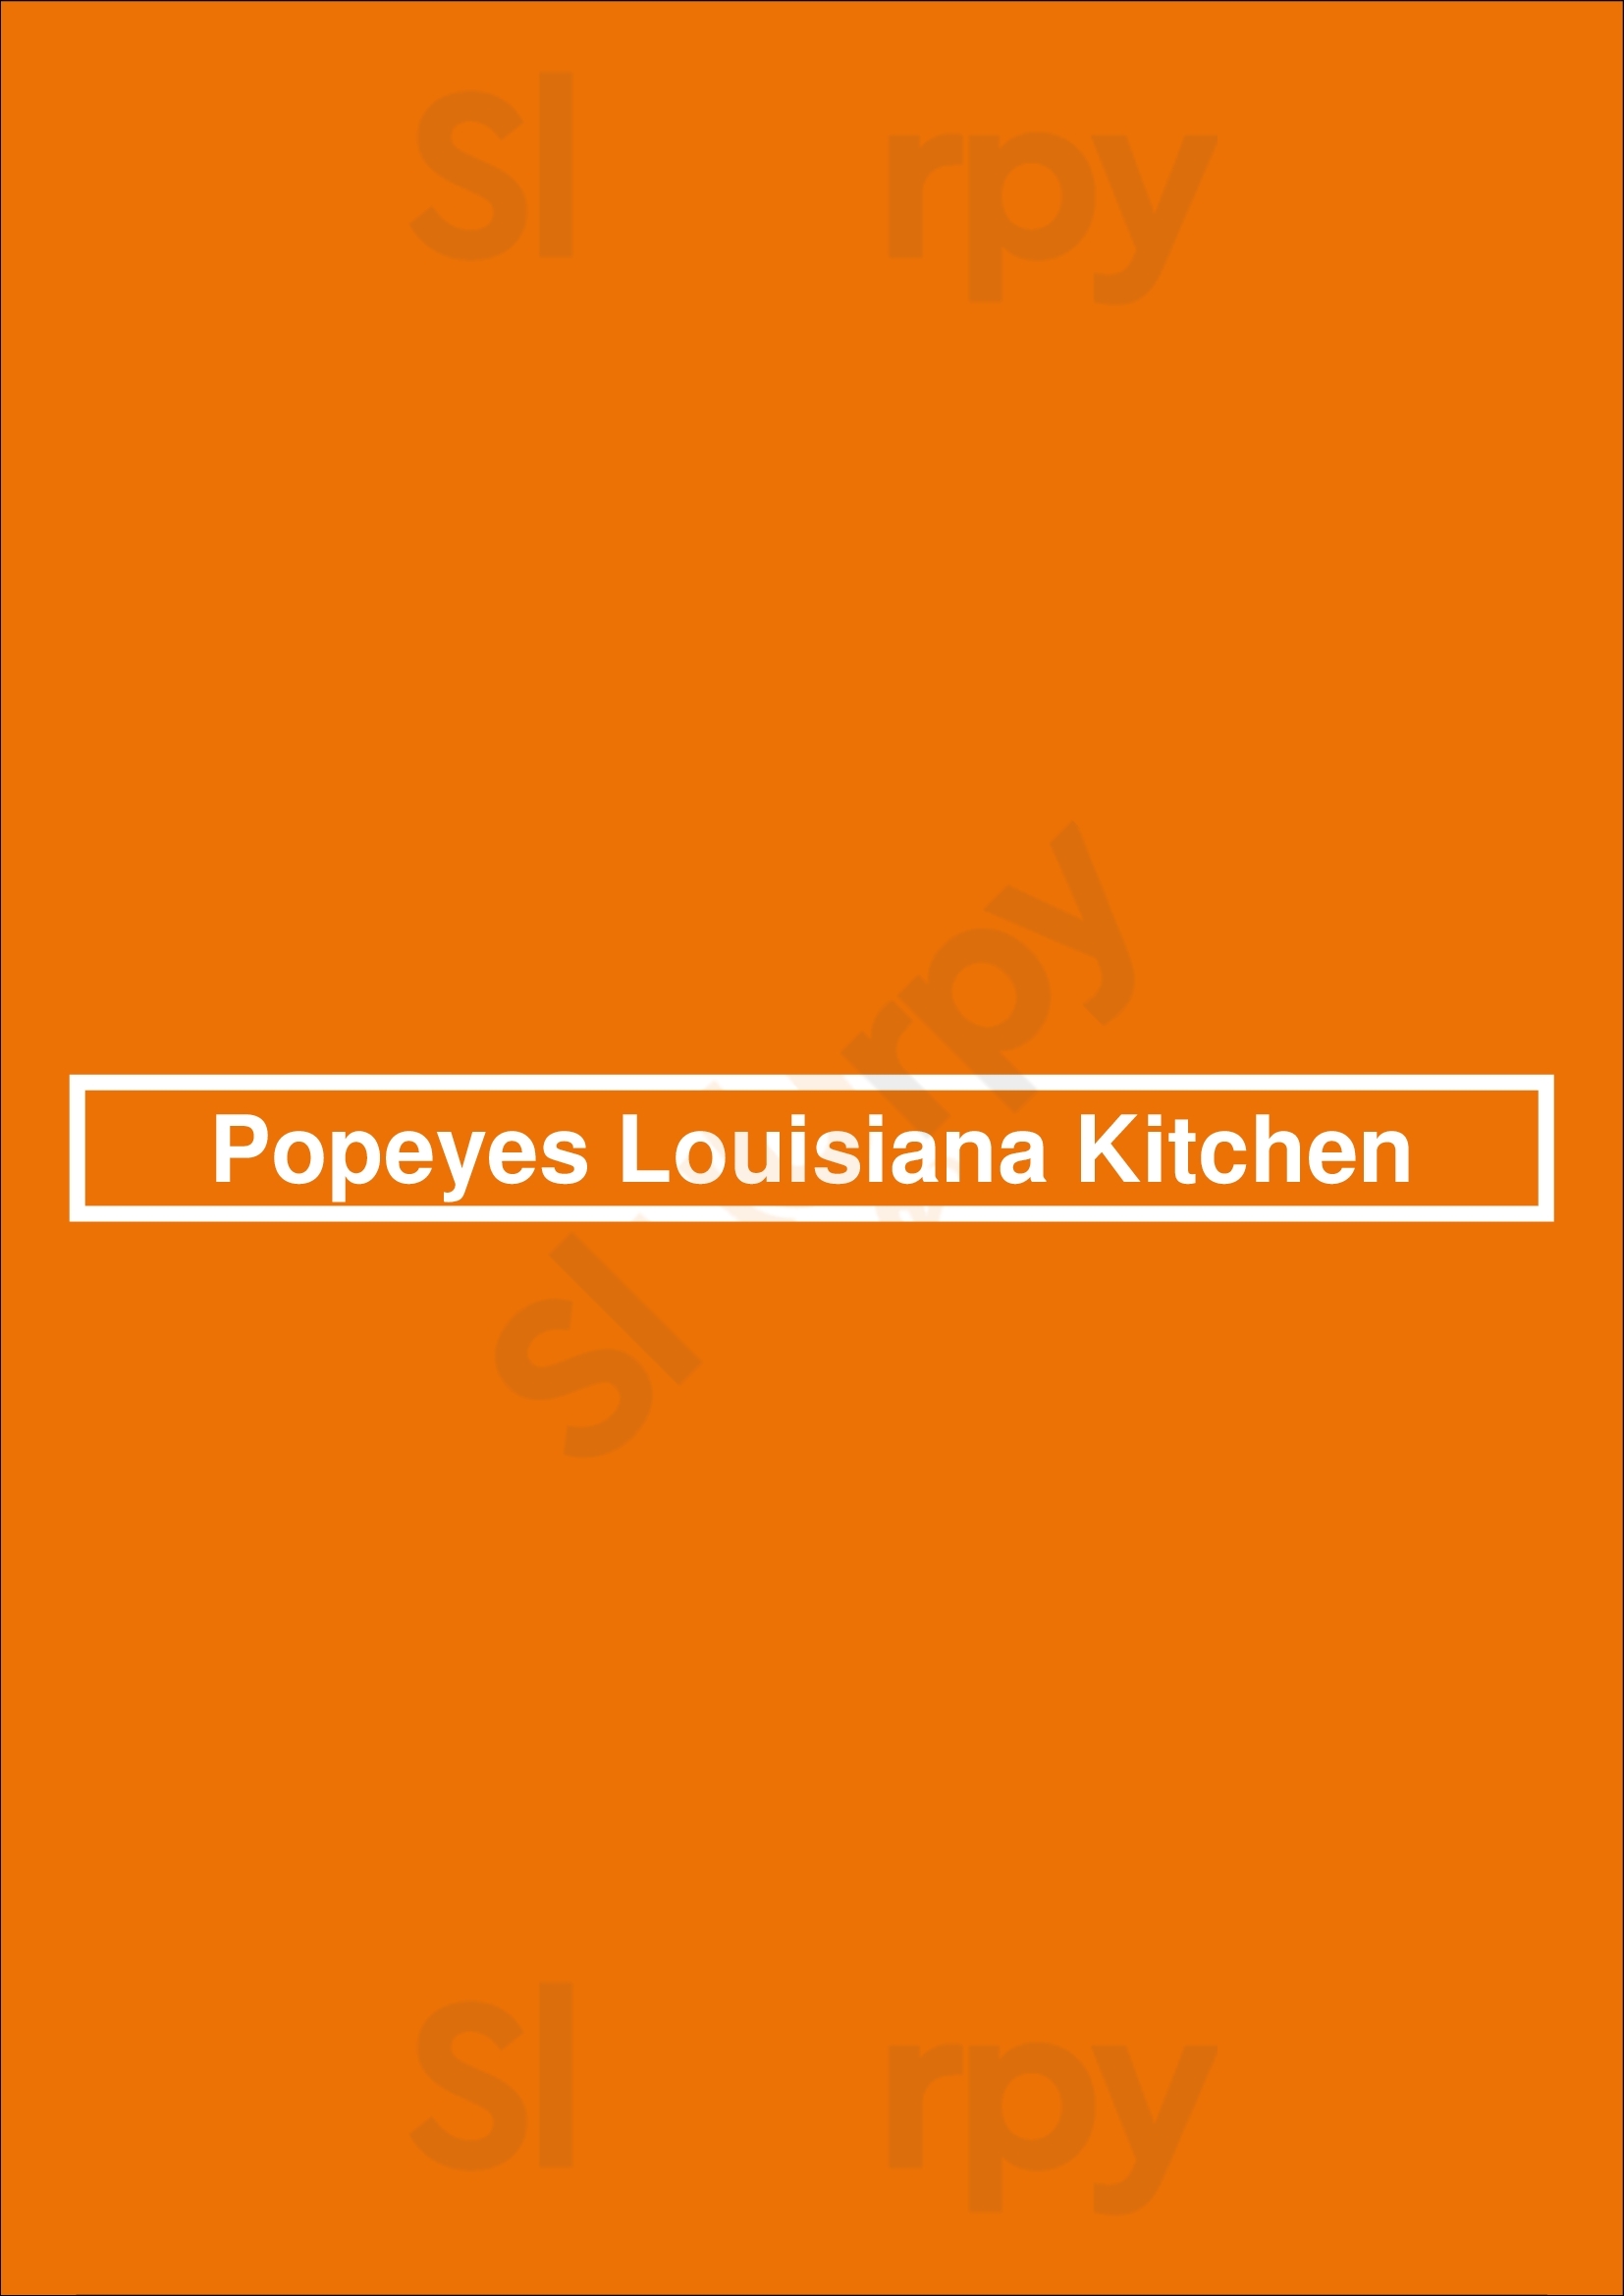 Popeyes Louisiana Kitchen Toronto Menu - 1